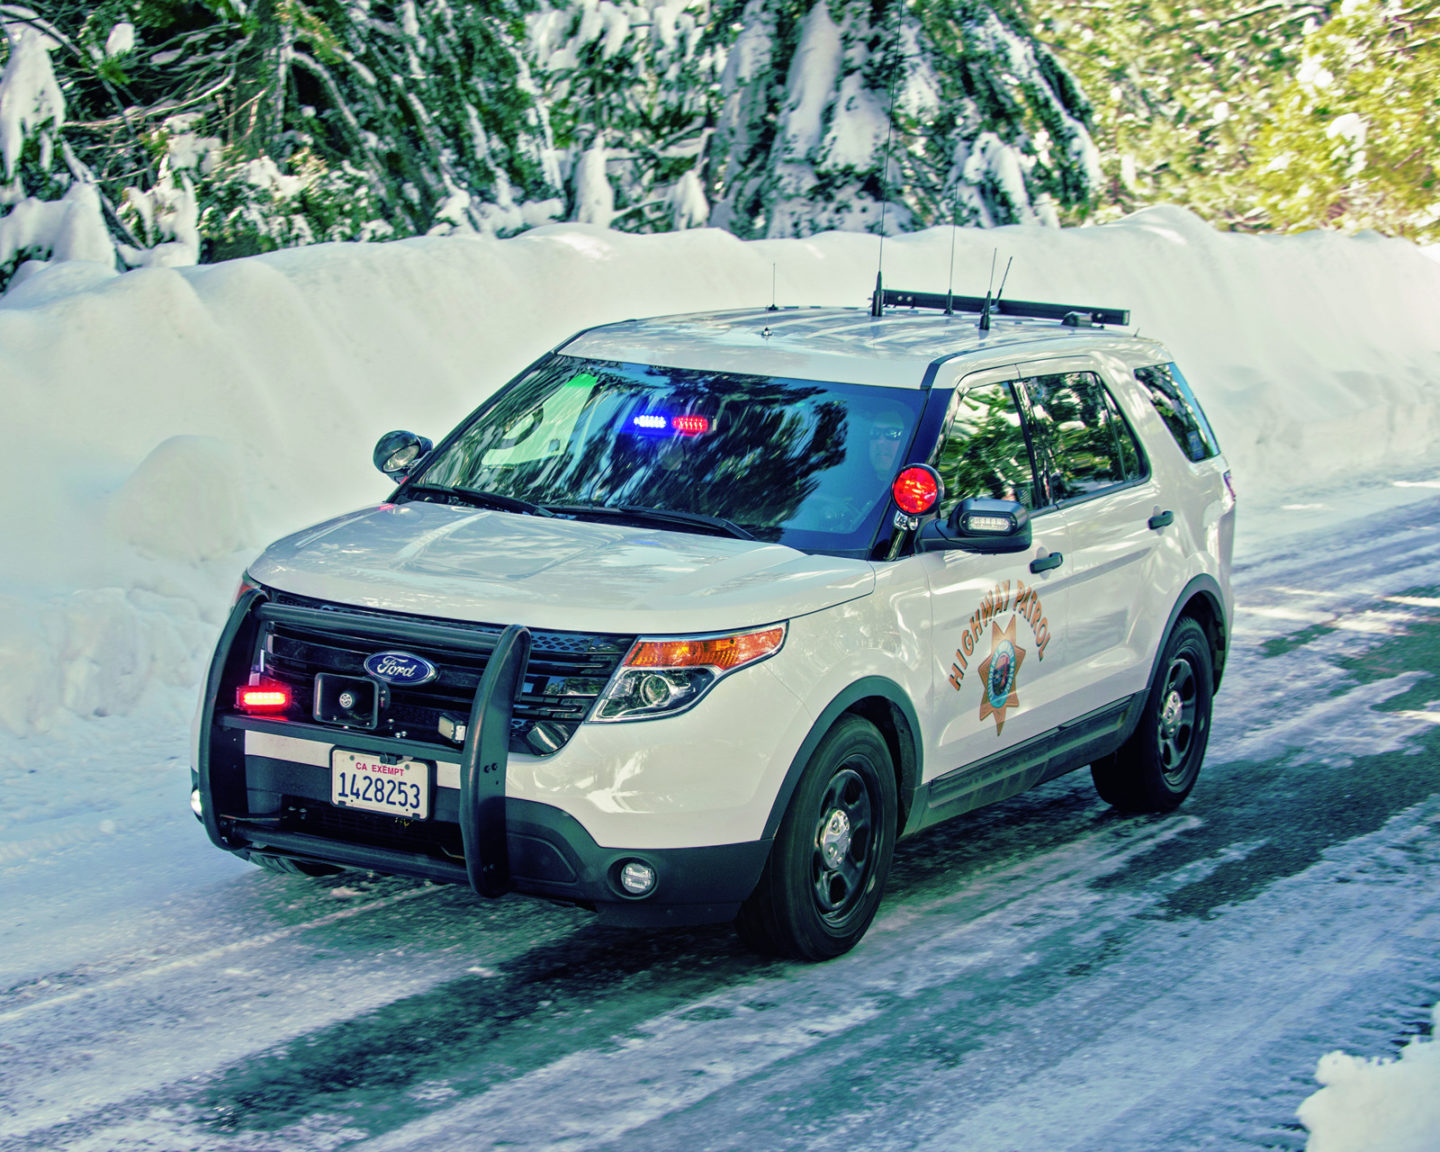 CHP White SUV in snow with lights_photo by Joe McHugh